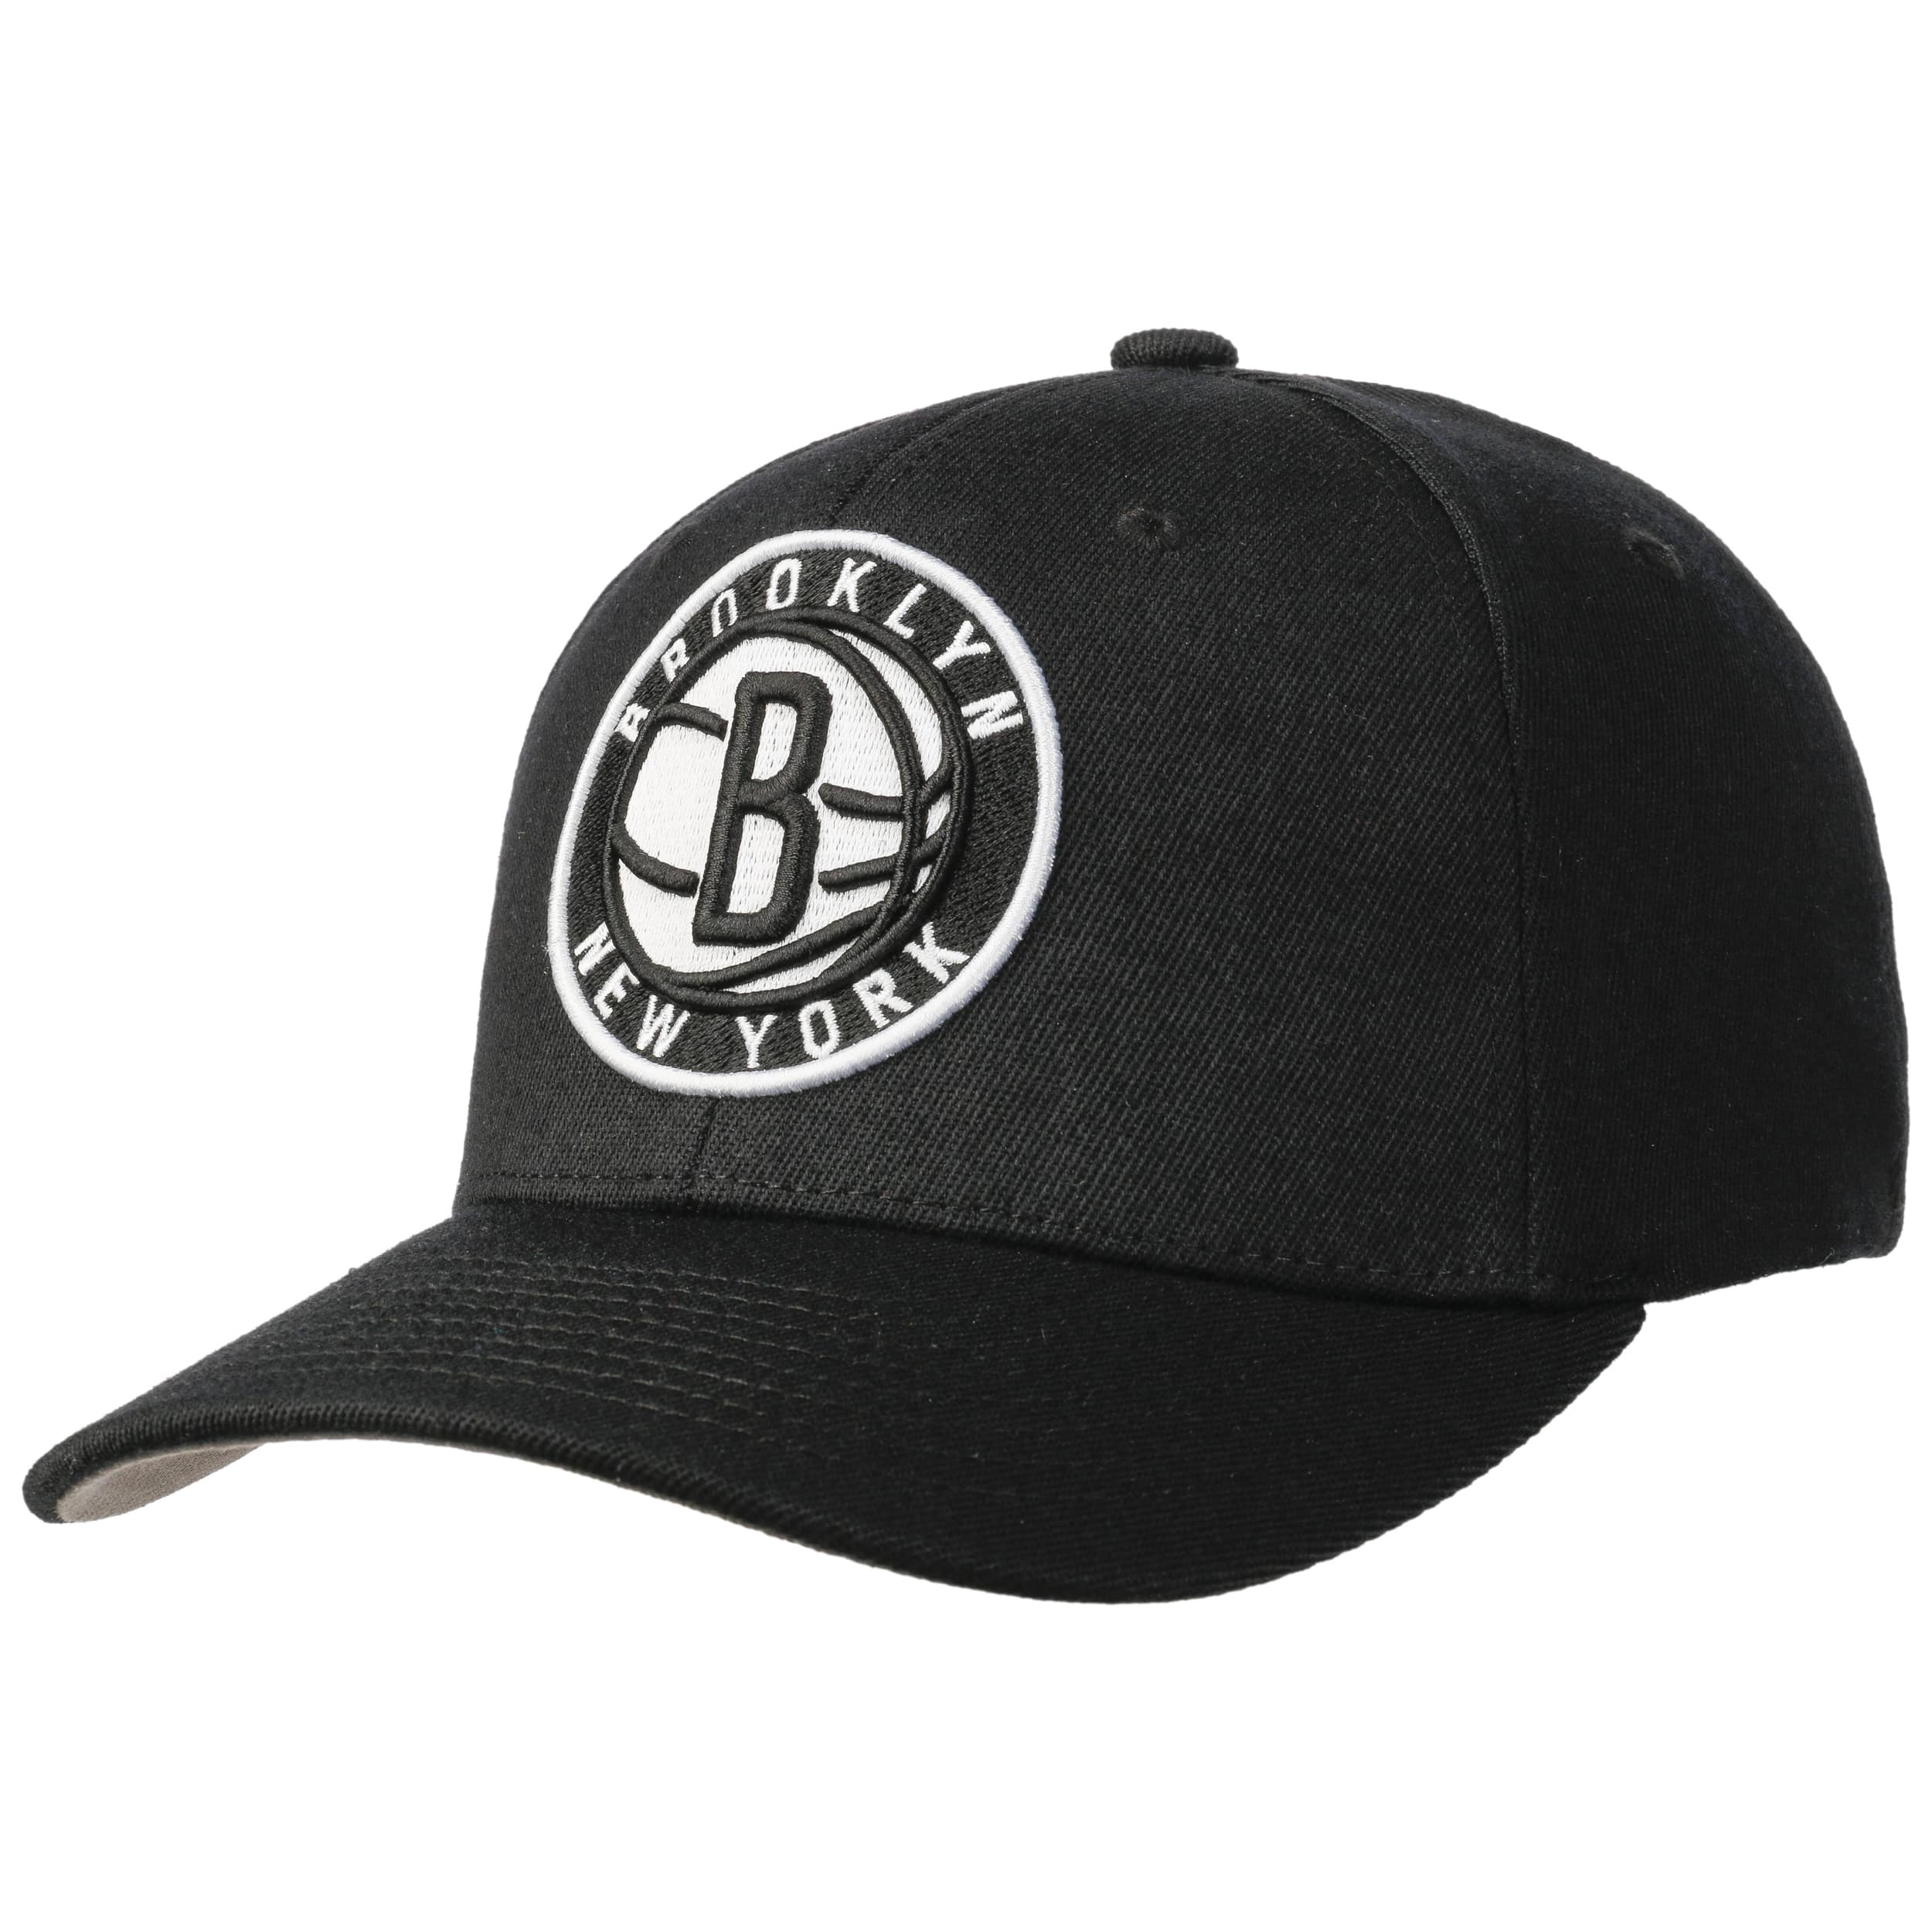 Yoj Sports Hunting & Fishing Hat Black Adjustable Baseball Cap Pre